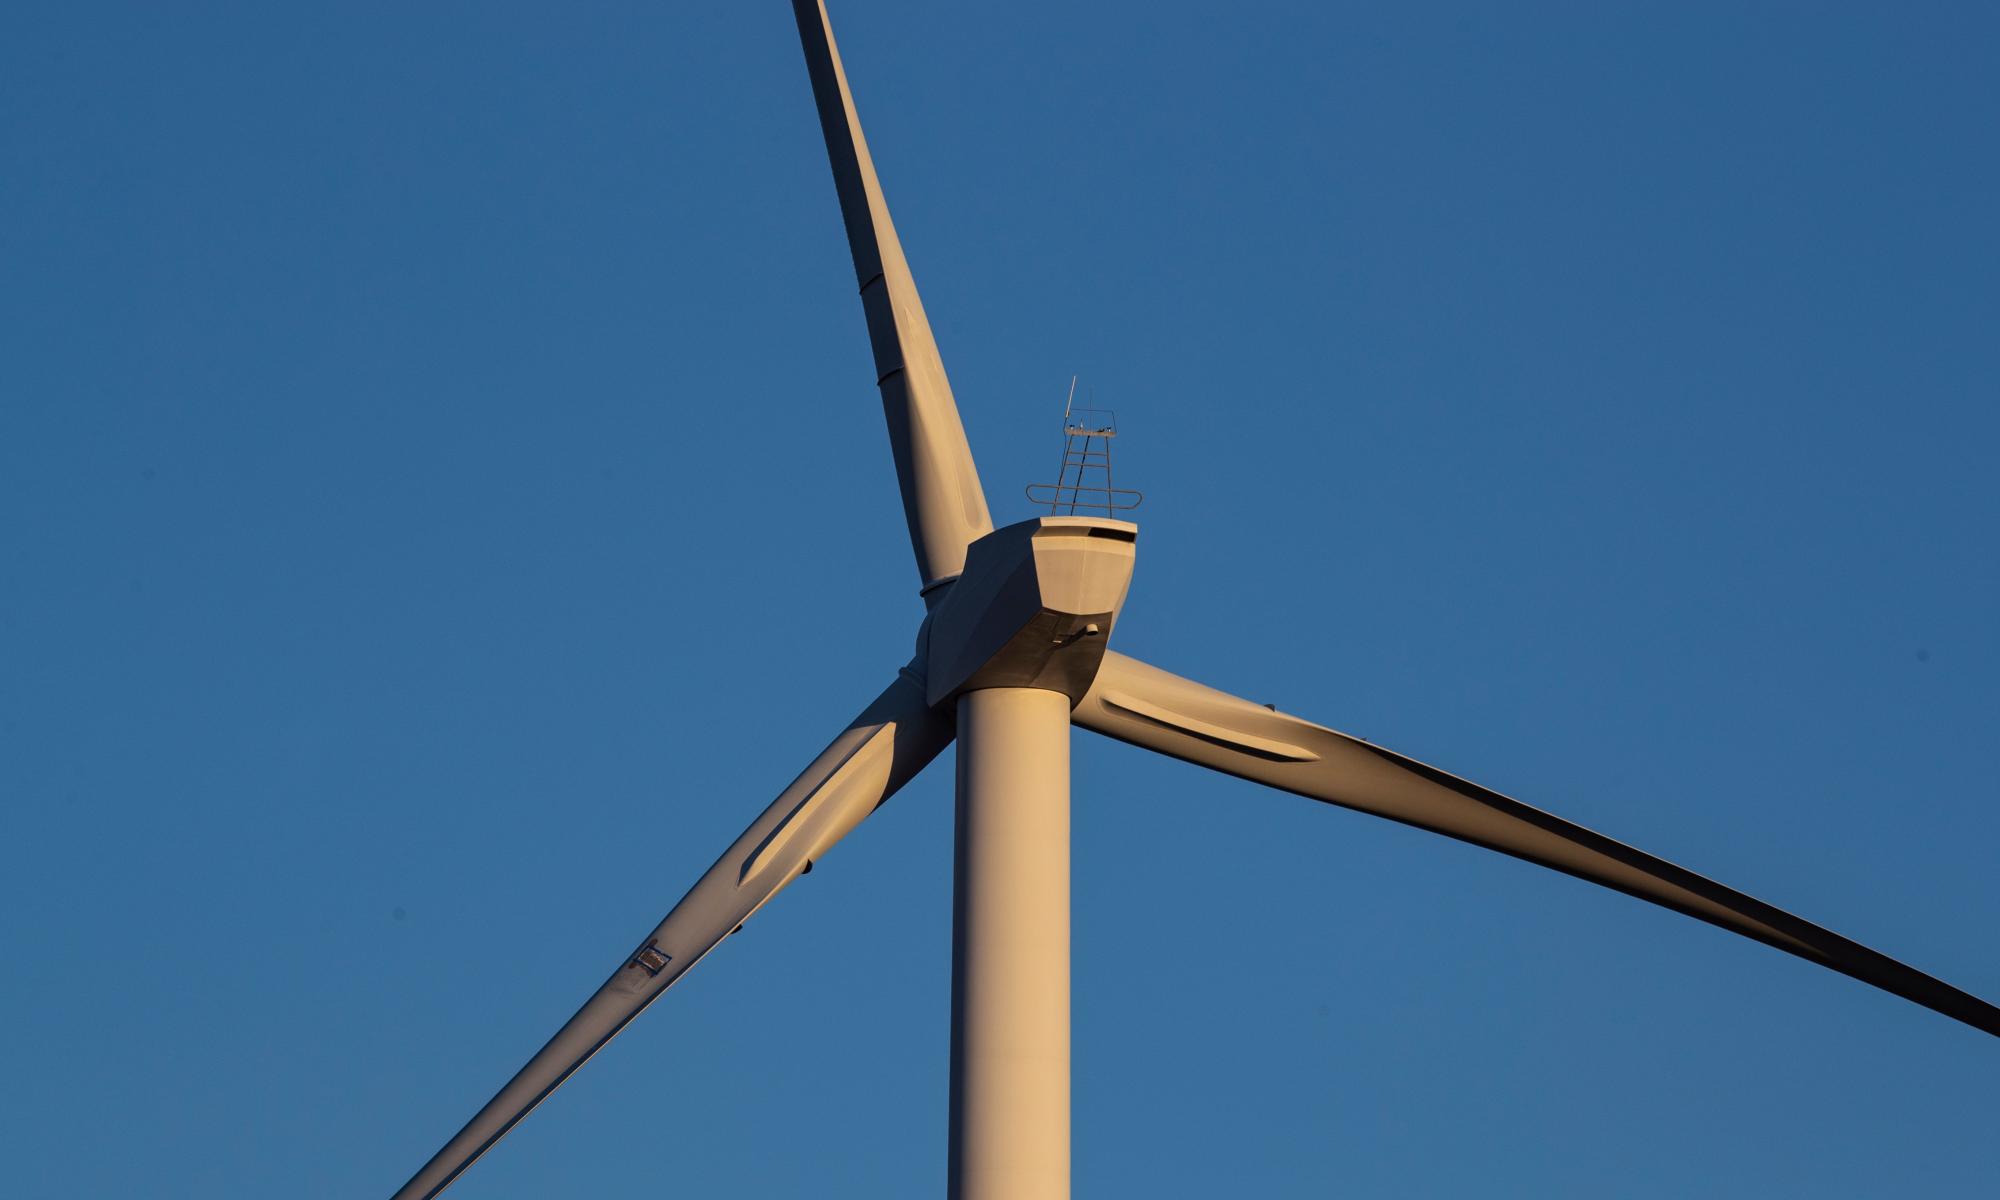 Windfarm off Norfolk coast gets second green light after court battle